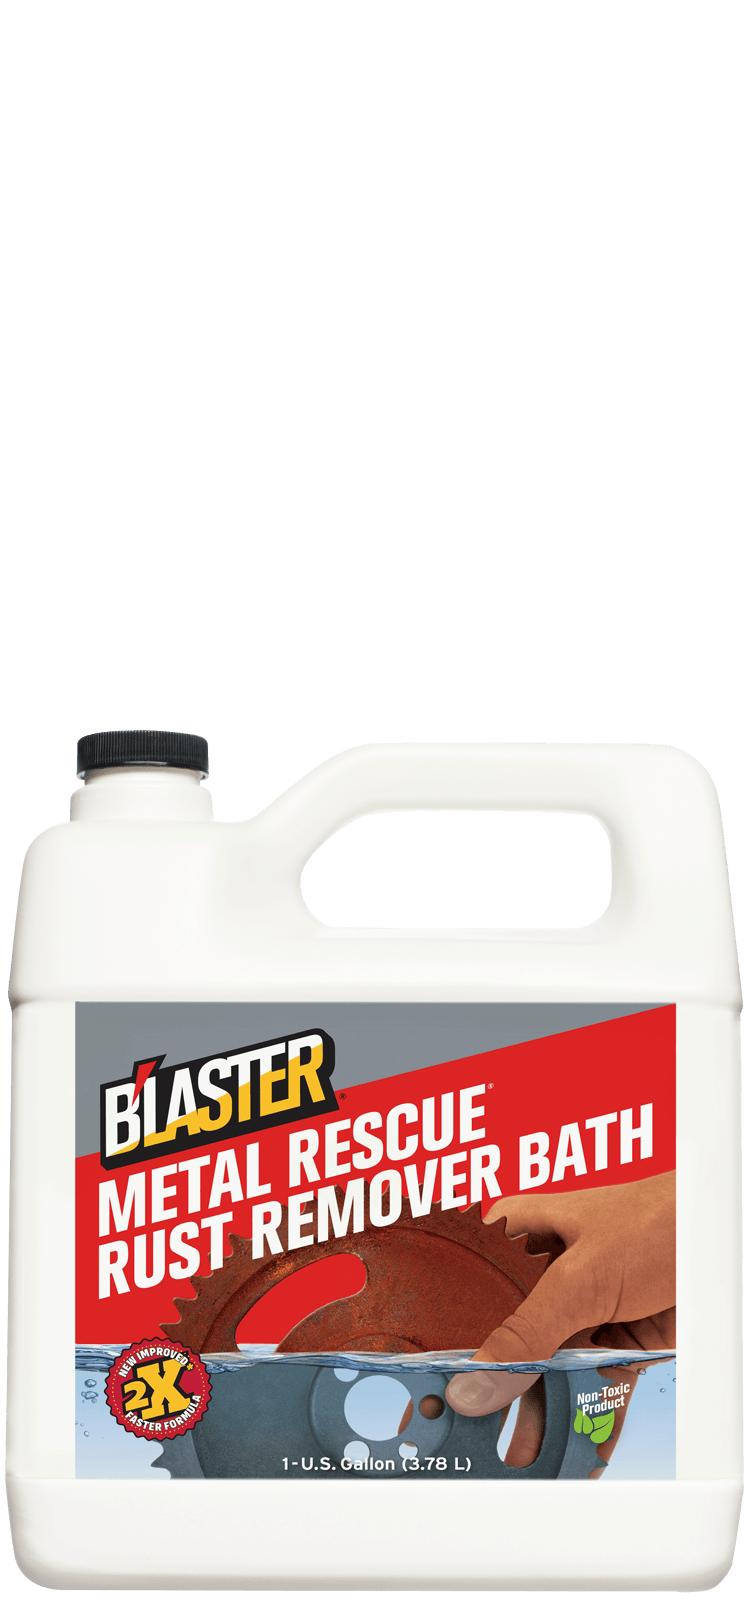 Workshop Hero Metal Rescue Rust Removal Bath 5L - MR-5 - Rust Converters